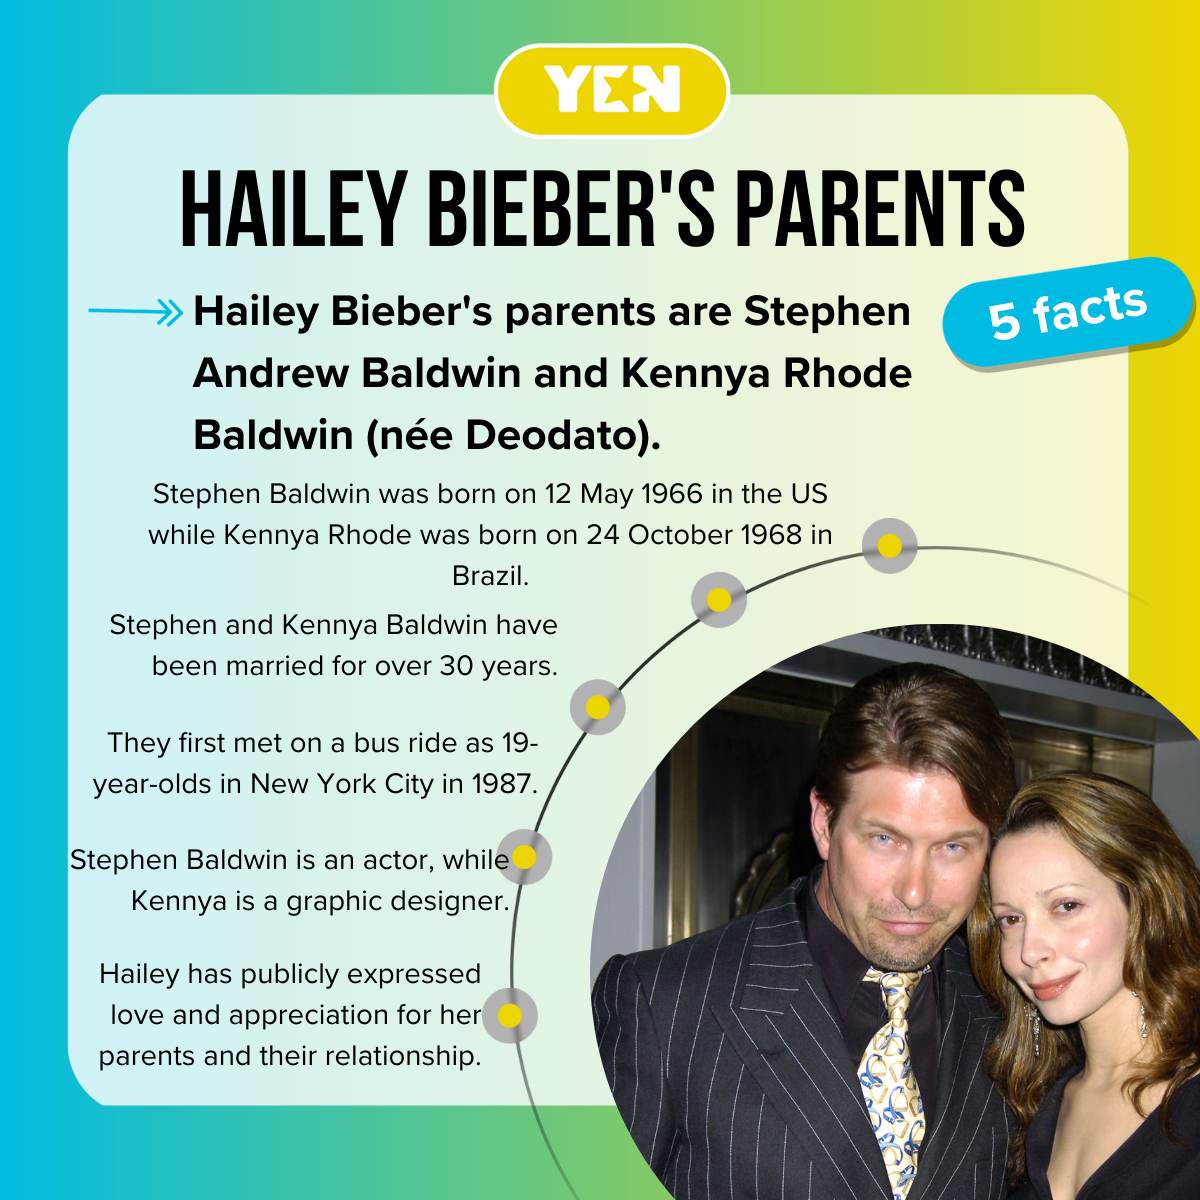 Five facts about Hailey Bieber's parents